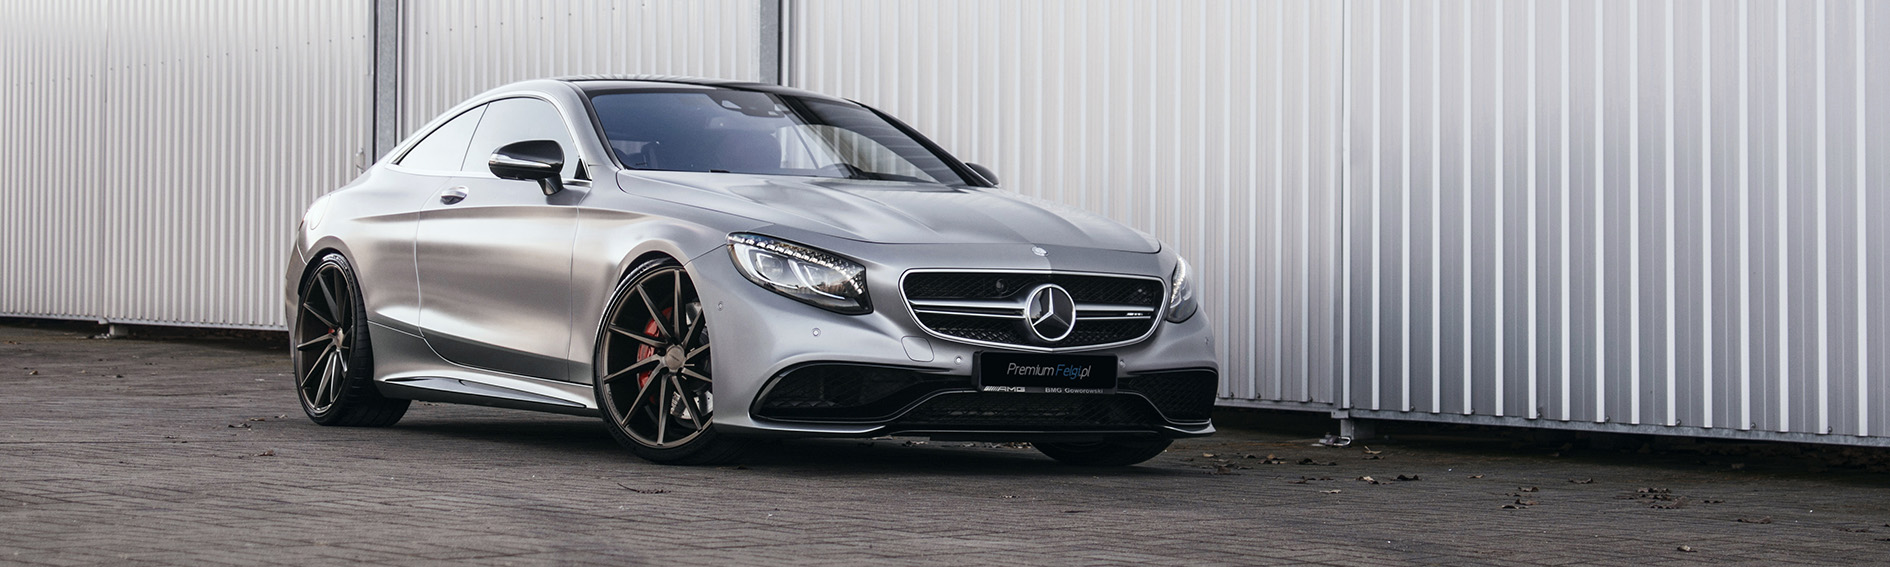 Gallery – PremiumFelgi Mercedes-AMG S63 Coupé | Vossen CVT - PremiumFelgi